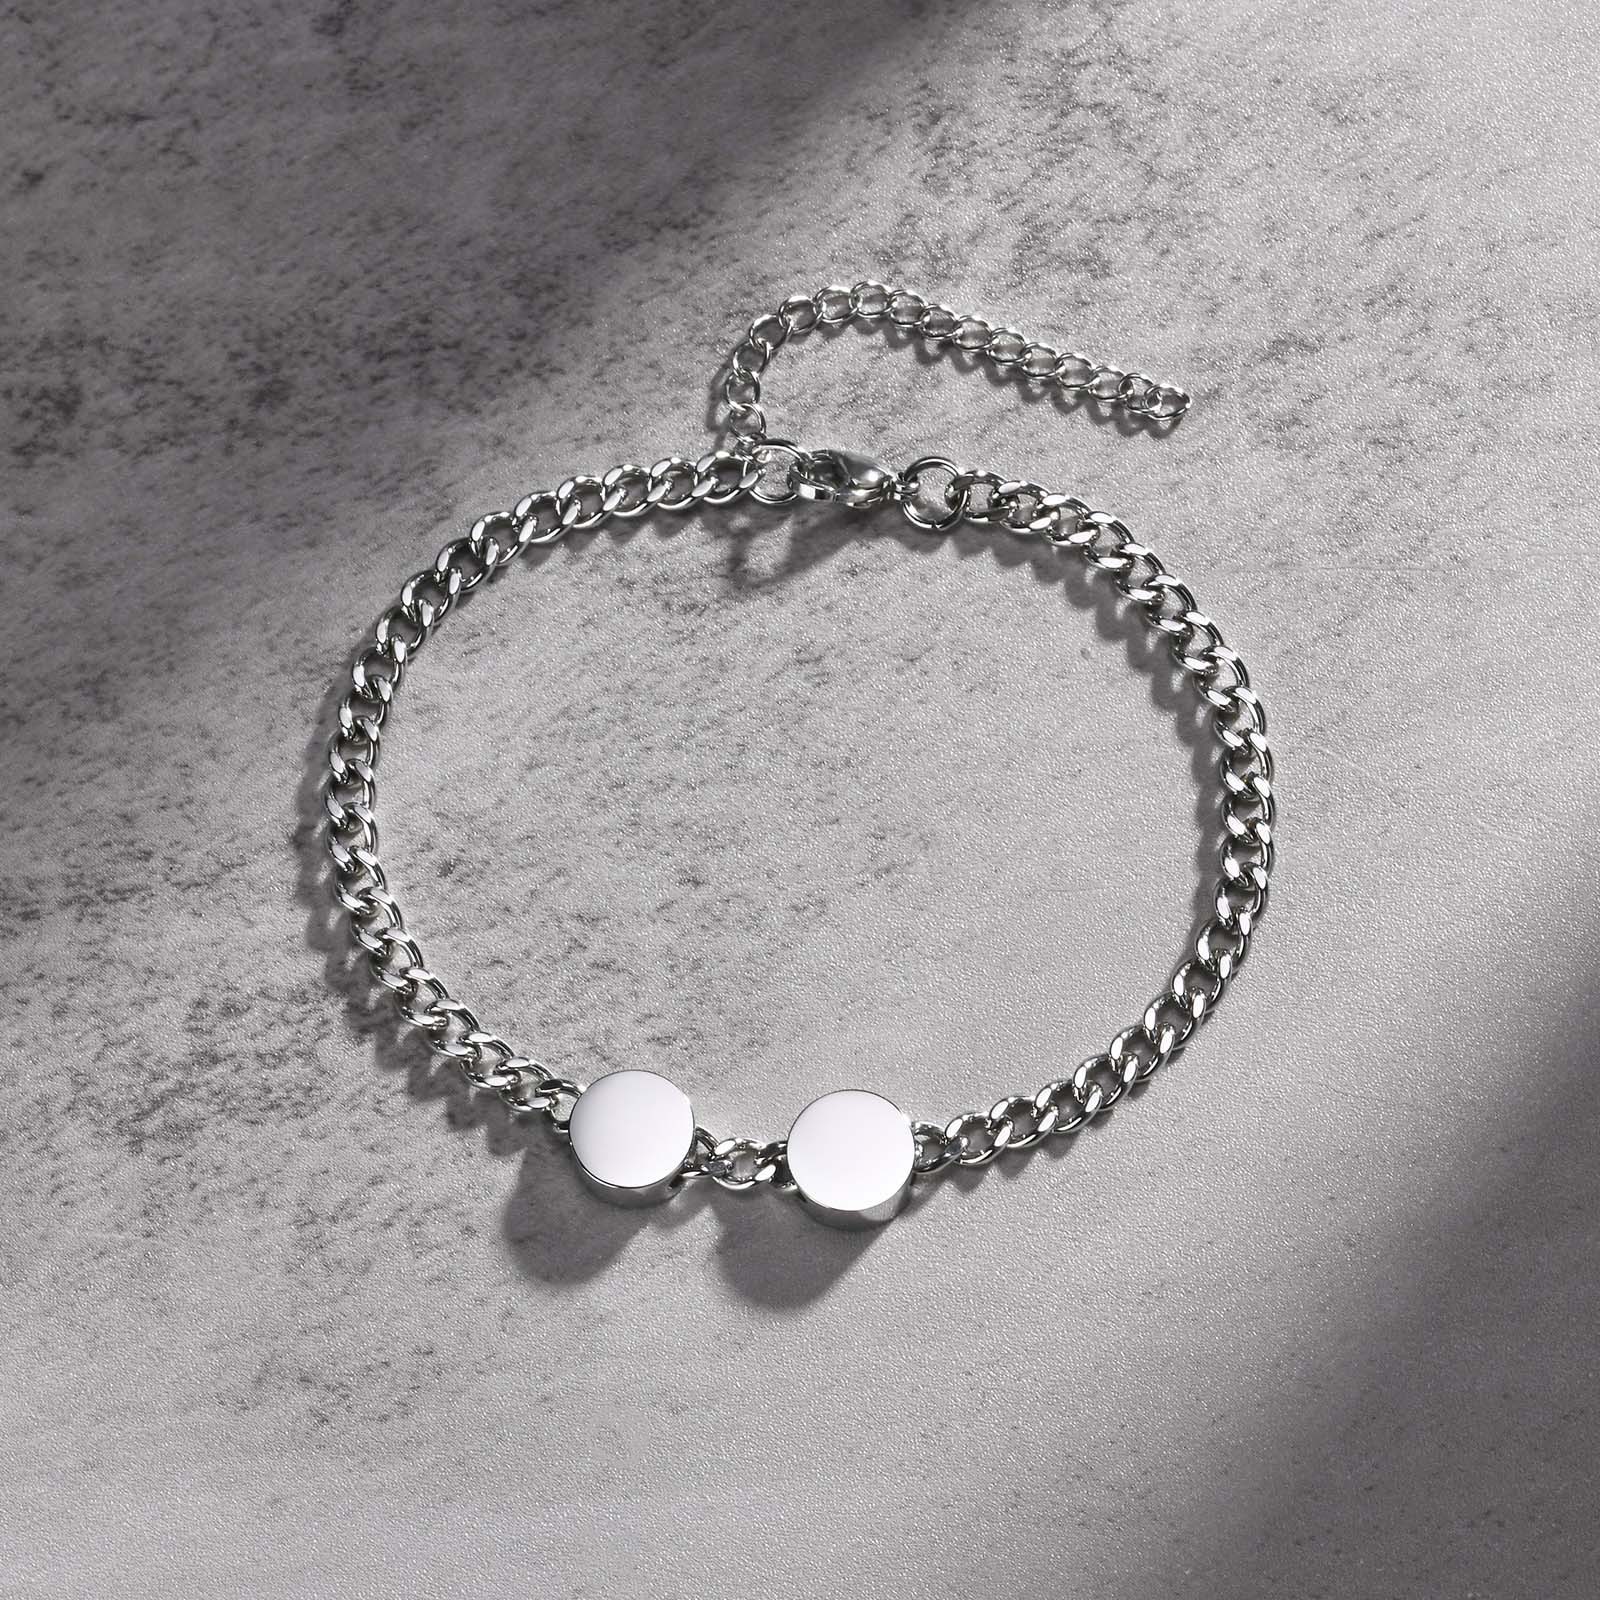 2 accessory [blank] bracelet